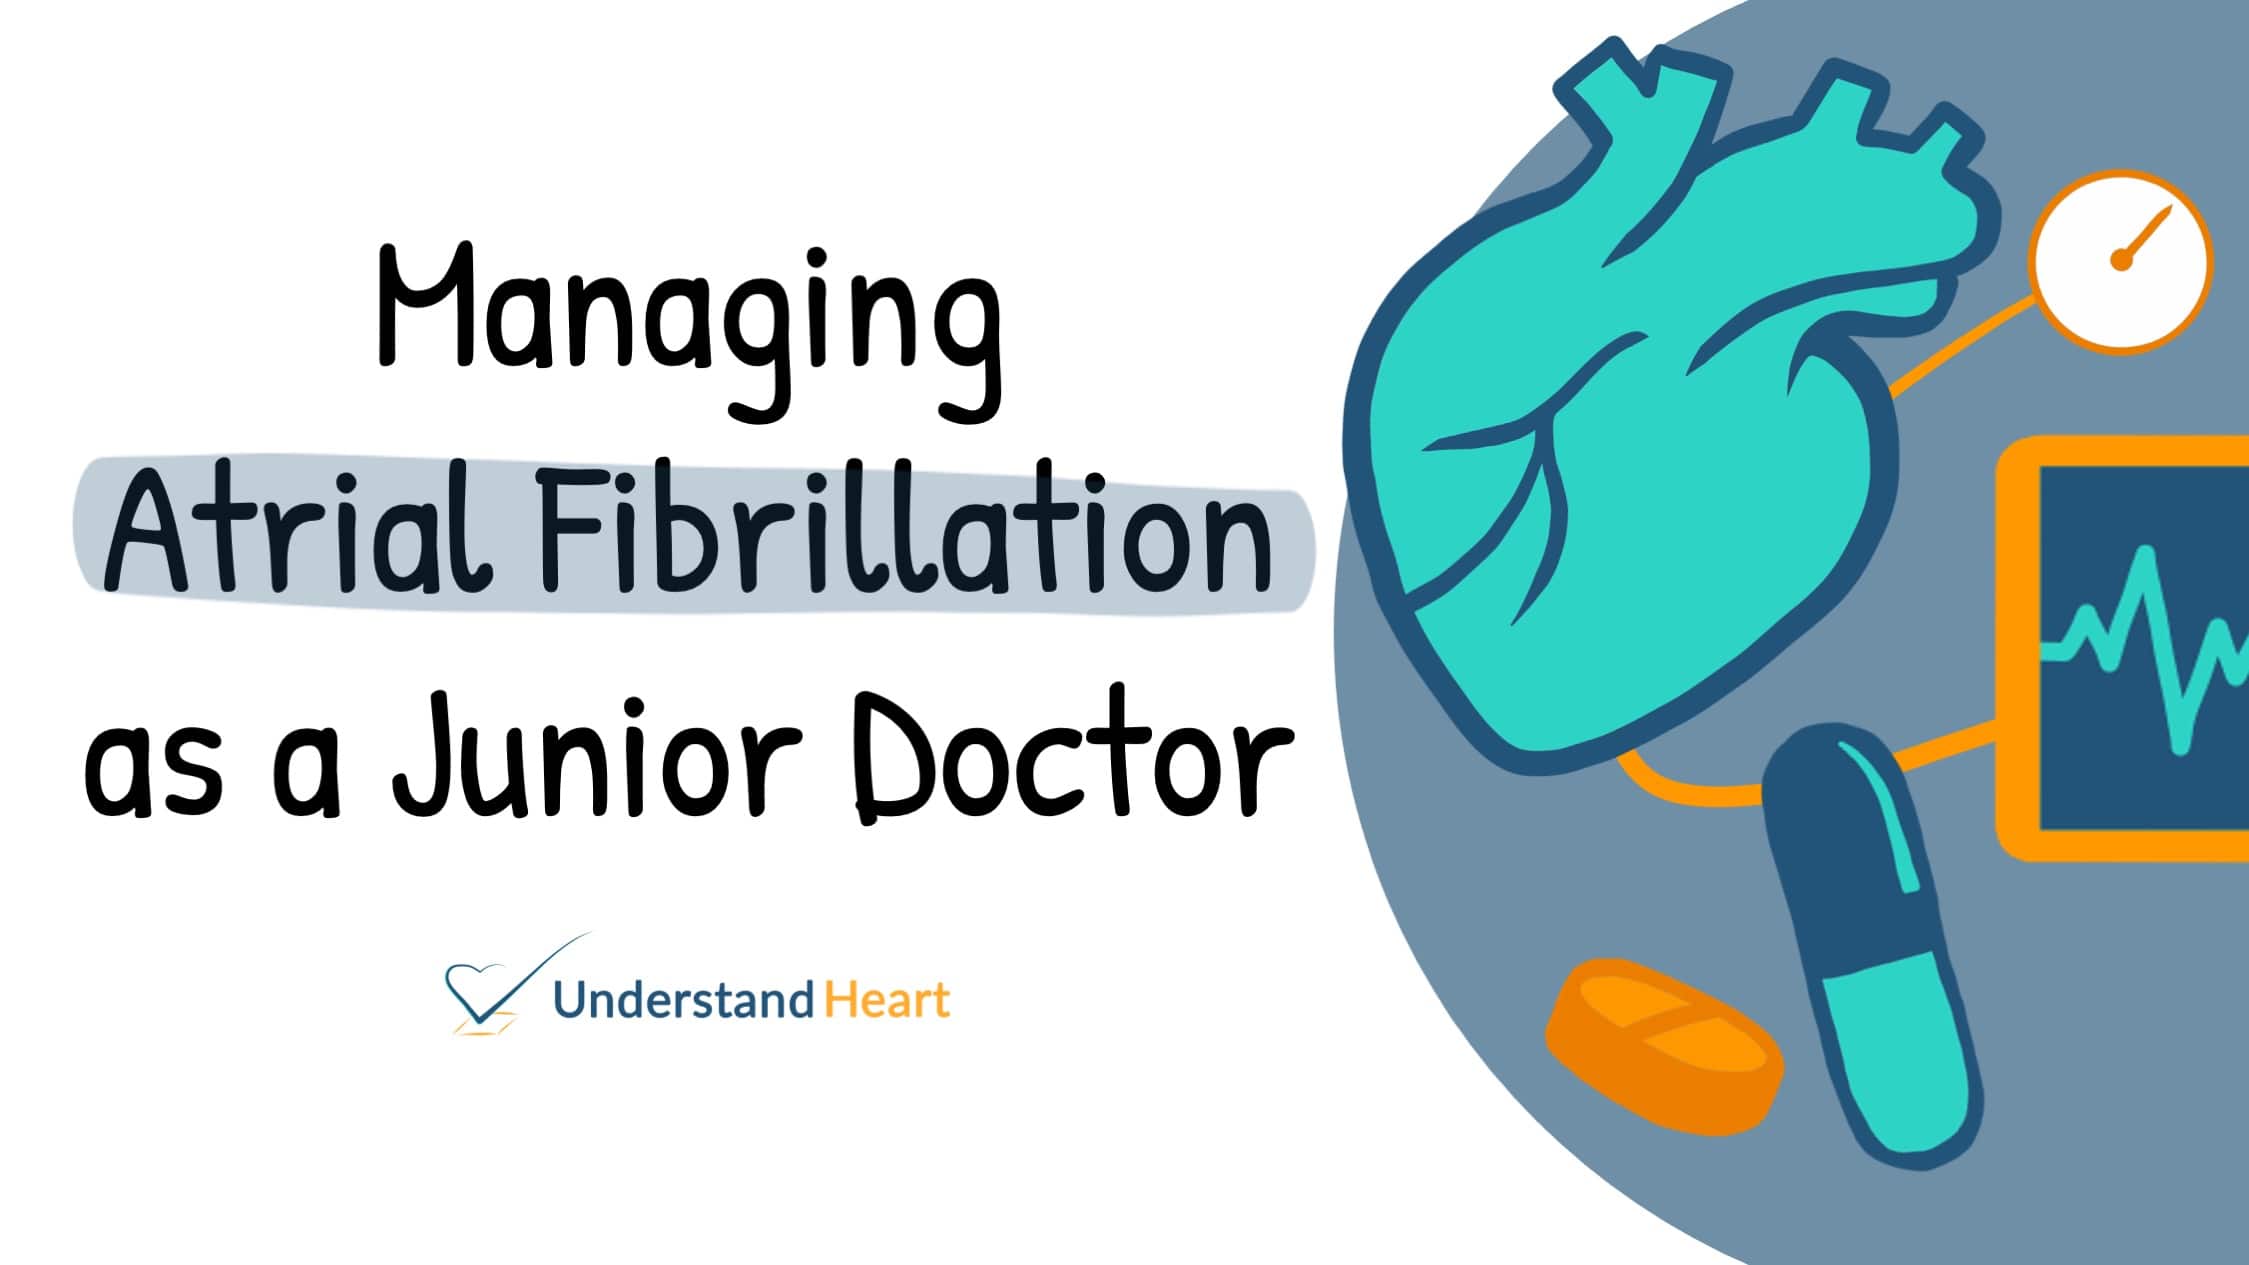 Atrial fibrillation management guide for junior doctors